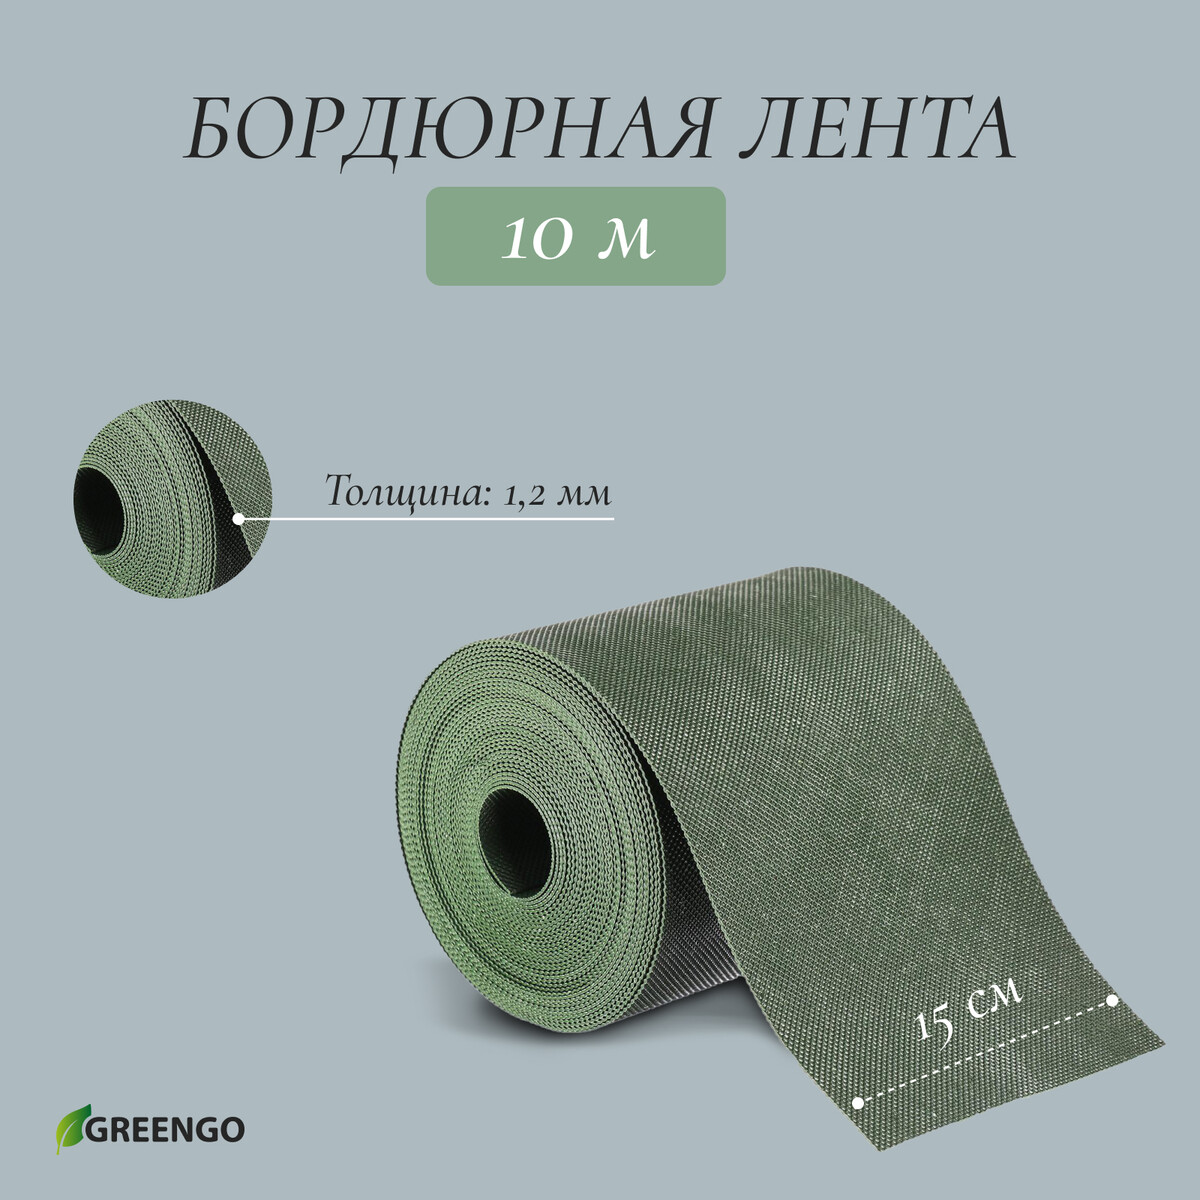 Лента бордюрная, 0.15 × 10 м, толщина 1.2 мм, пластиковая, зеленая, greengo лента упаковочная металлик зеленая 5 мм х 225 м